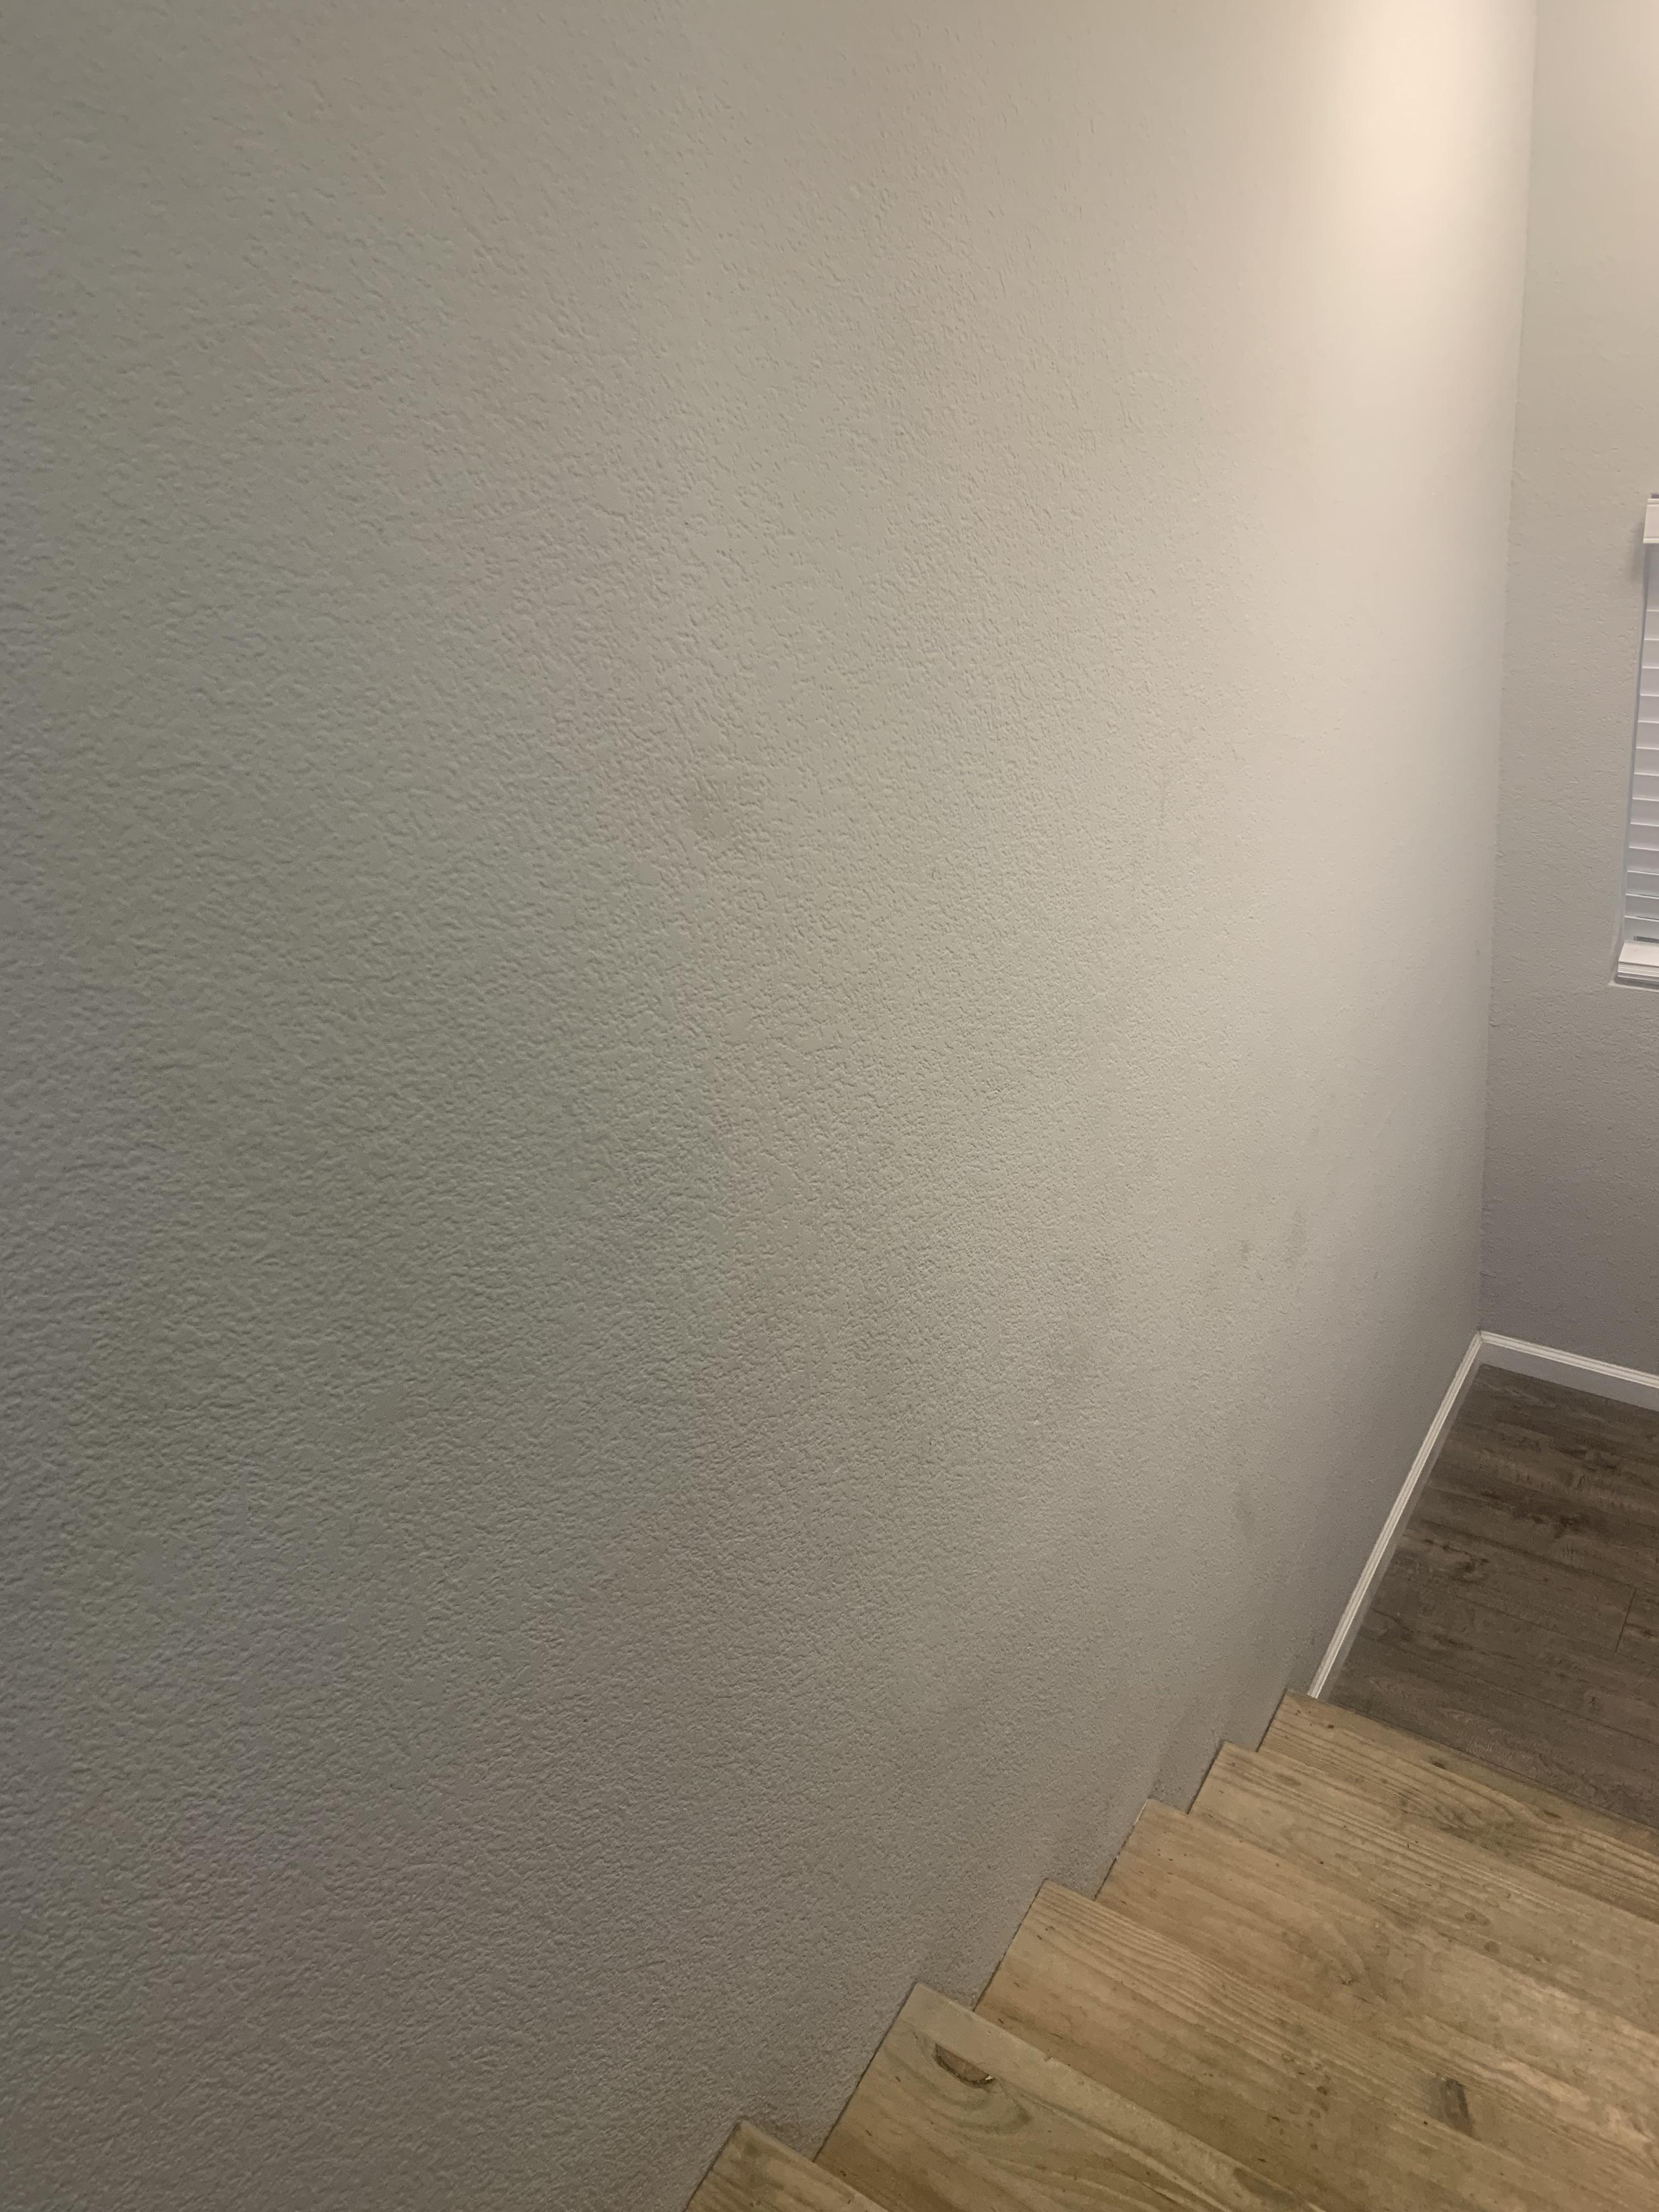 clean wall